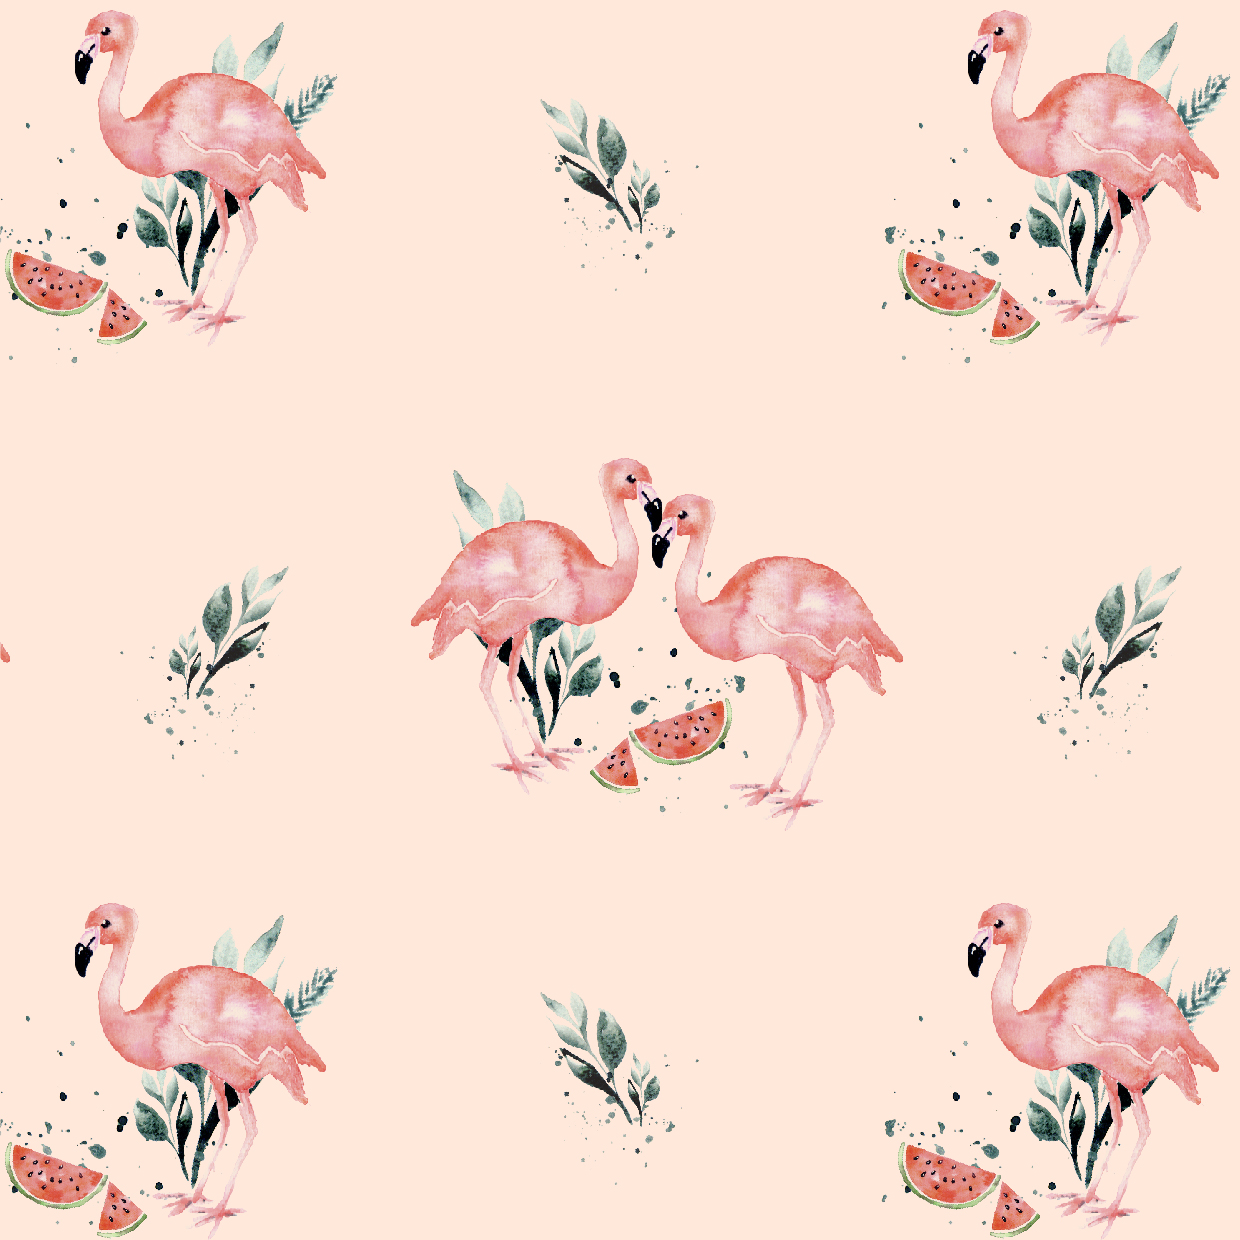 Flamingo mit Melone 